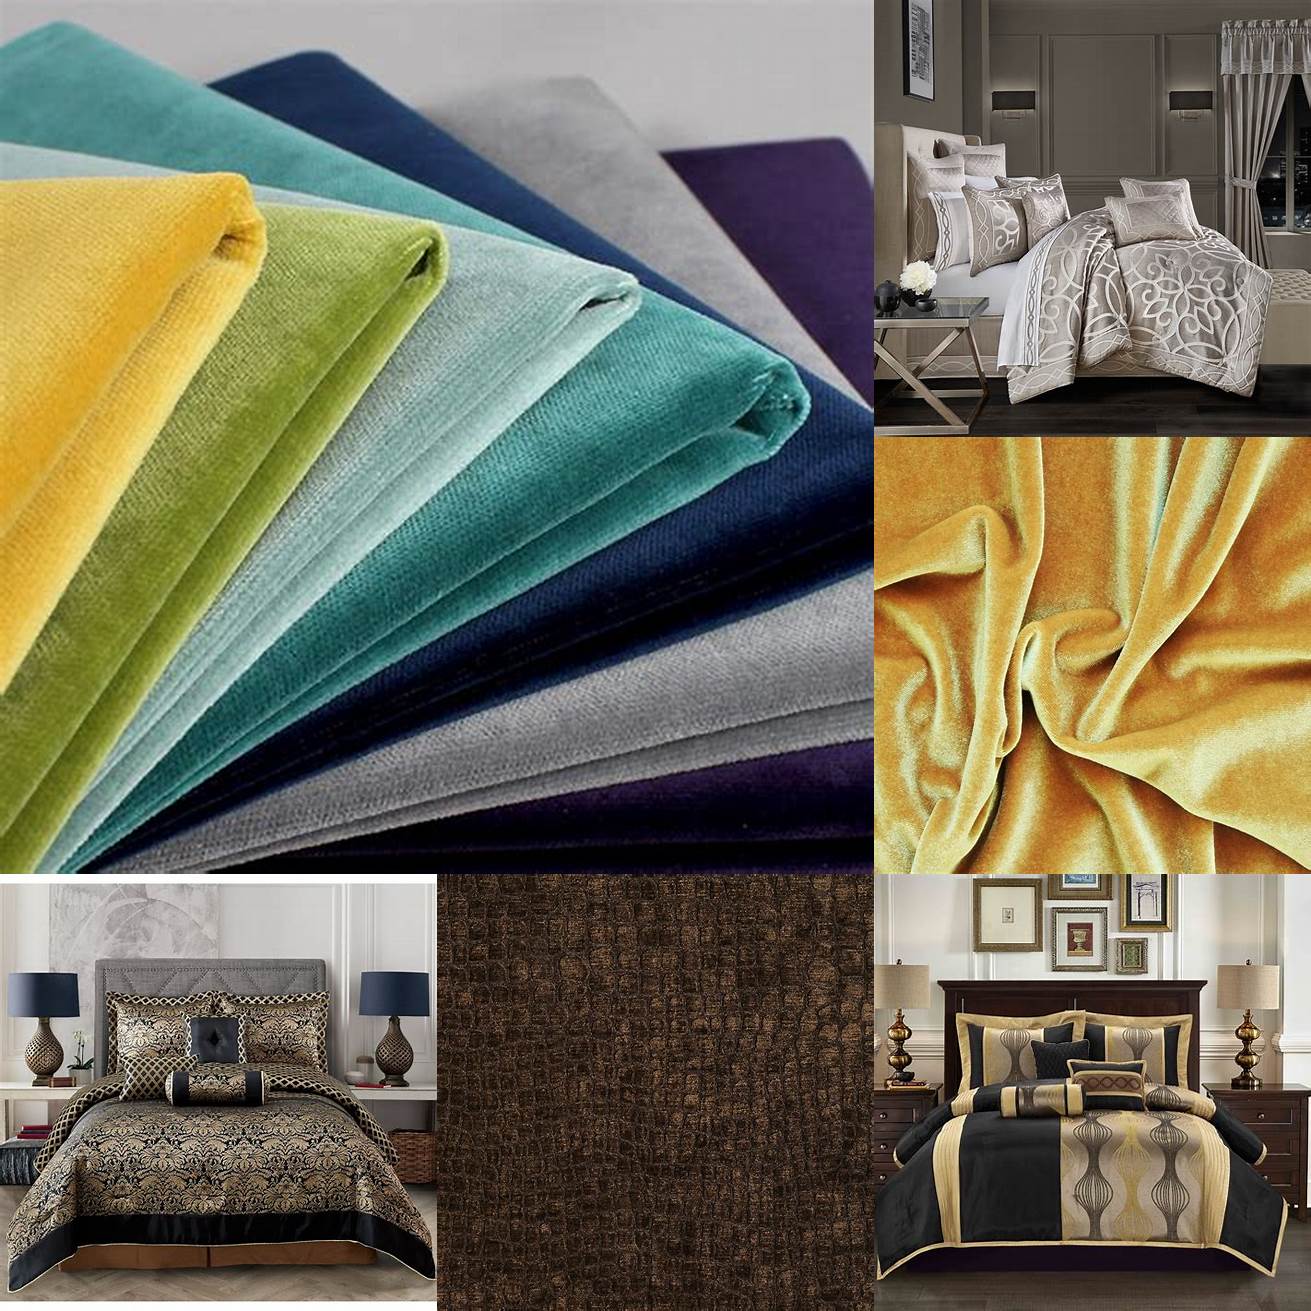 Textured fabrics such as velvet are a popular design trend in modern bedding